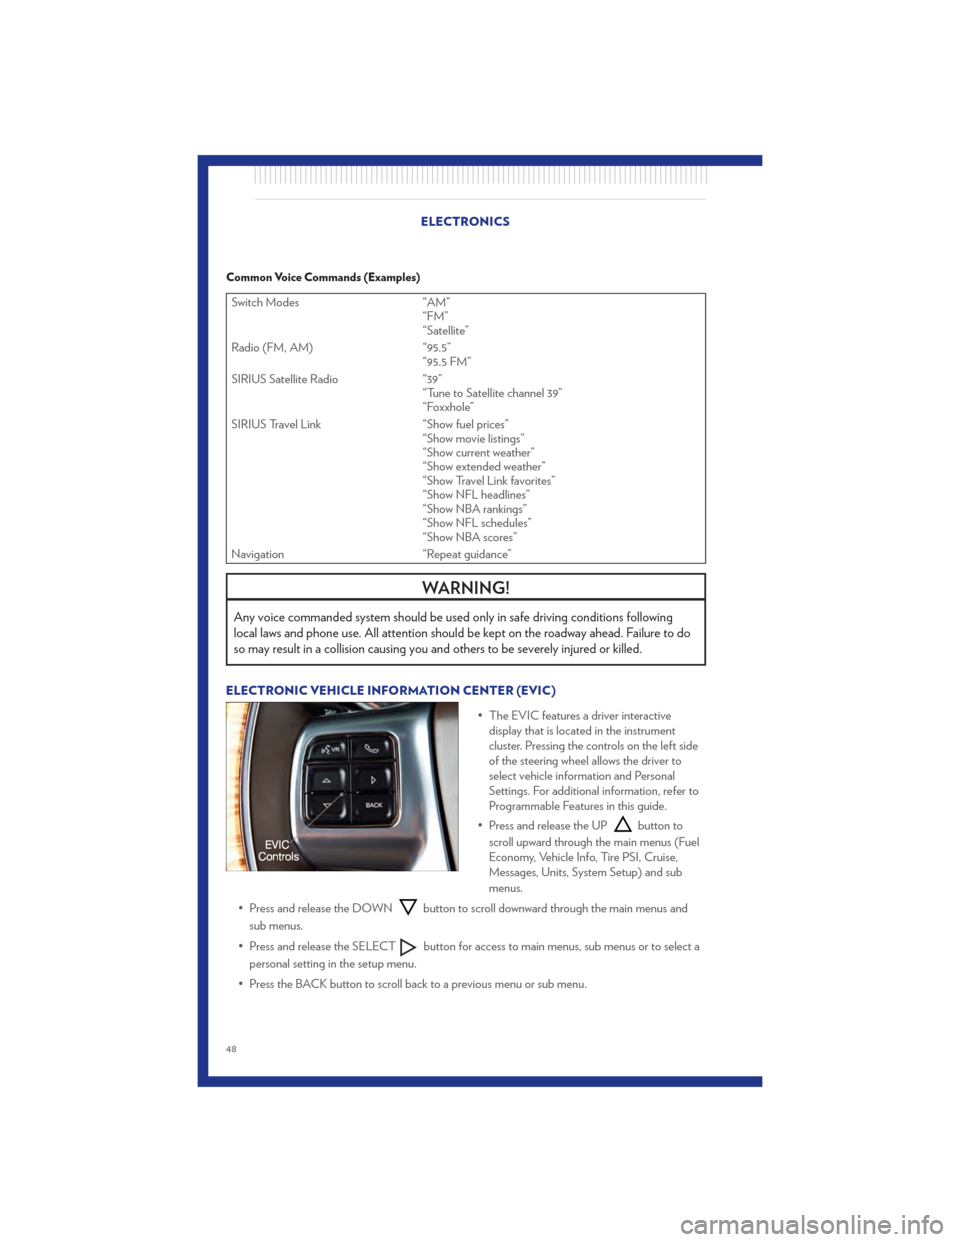 CHRYSLER 300 2011 2.G Service Manual Common Voice Commands (Examples)
Switch Modes“AM”
“FM”
“Satellite”
Radio (FM, AM) “95.5”
“95.5 FM”
SIRIUS Satellite Radio “39”
“Tune to Satellite channel 39”
“Foxxhole”